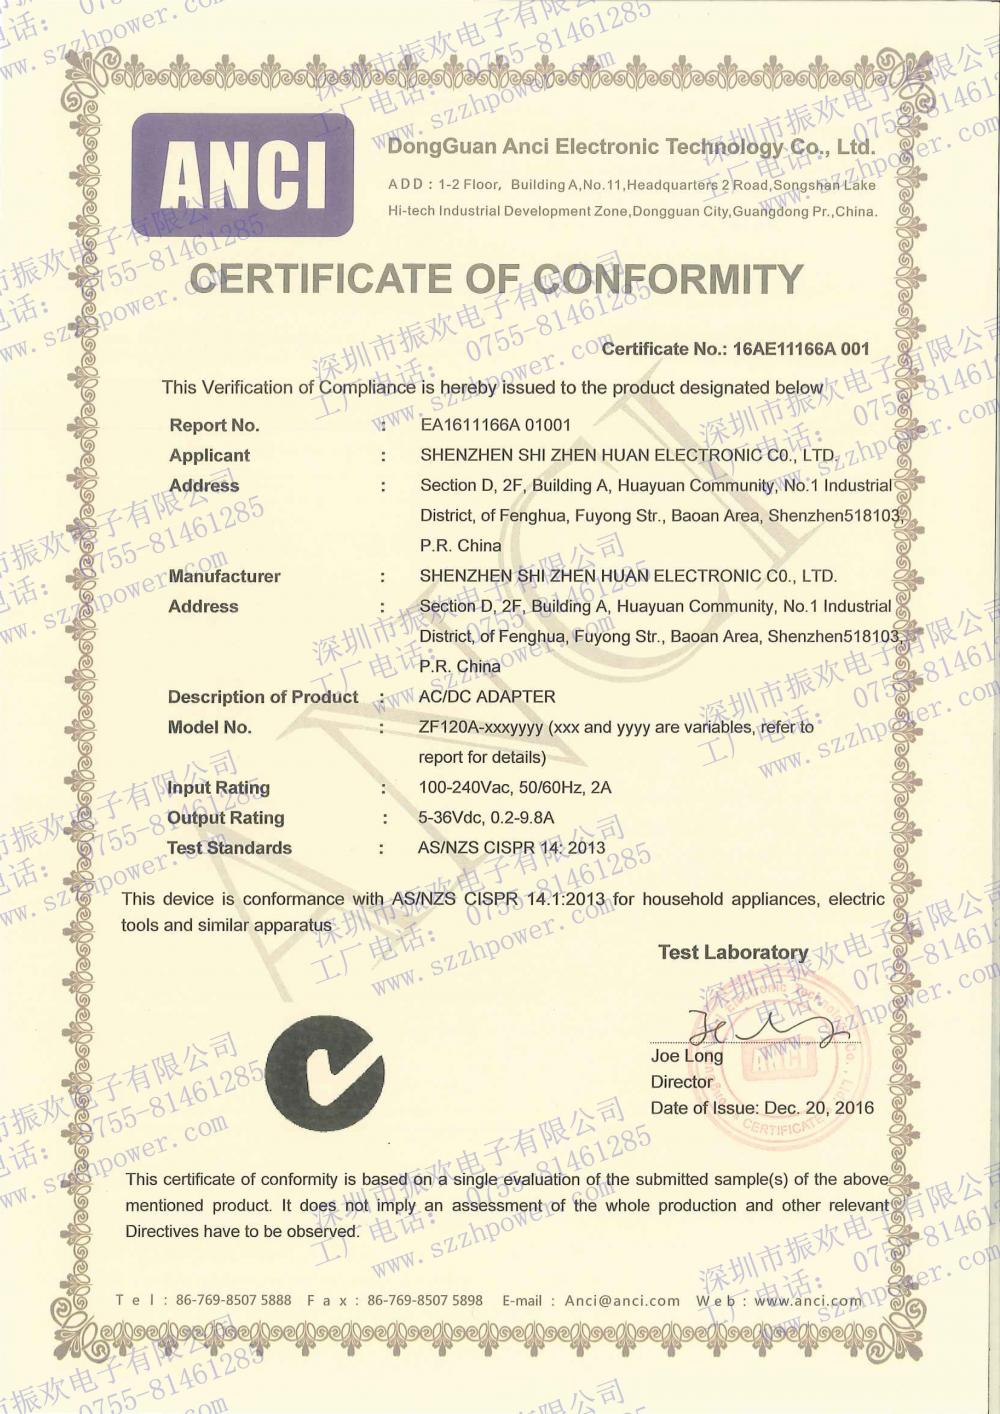 C-Tick certificate